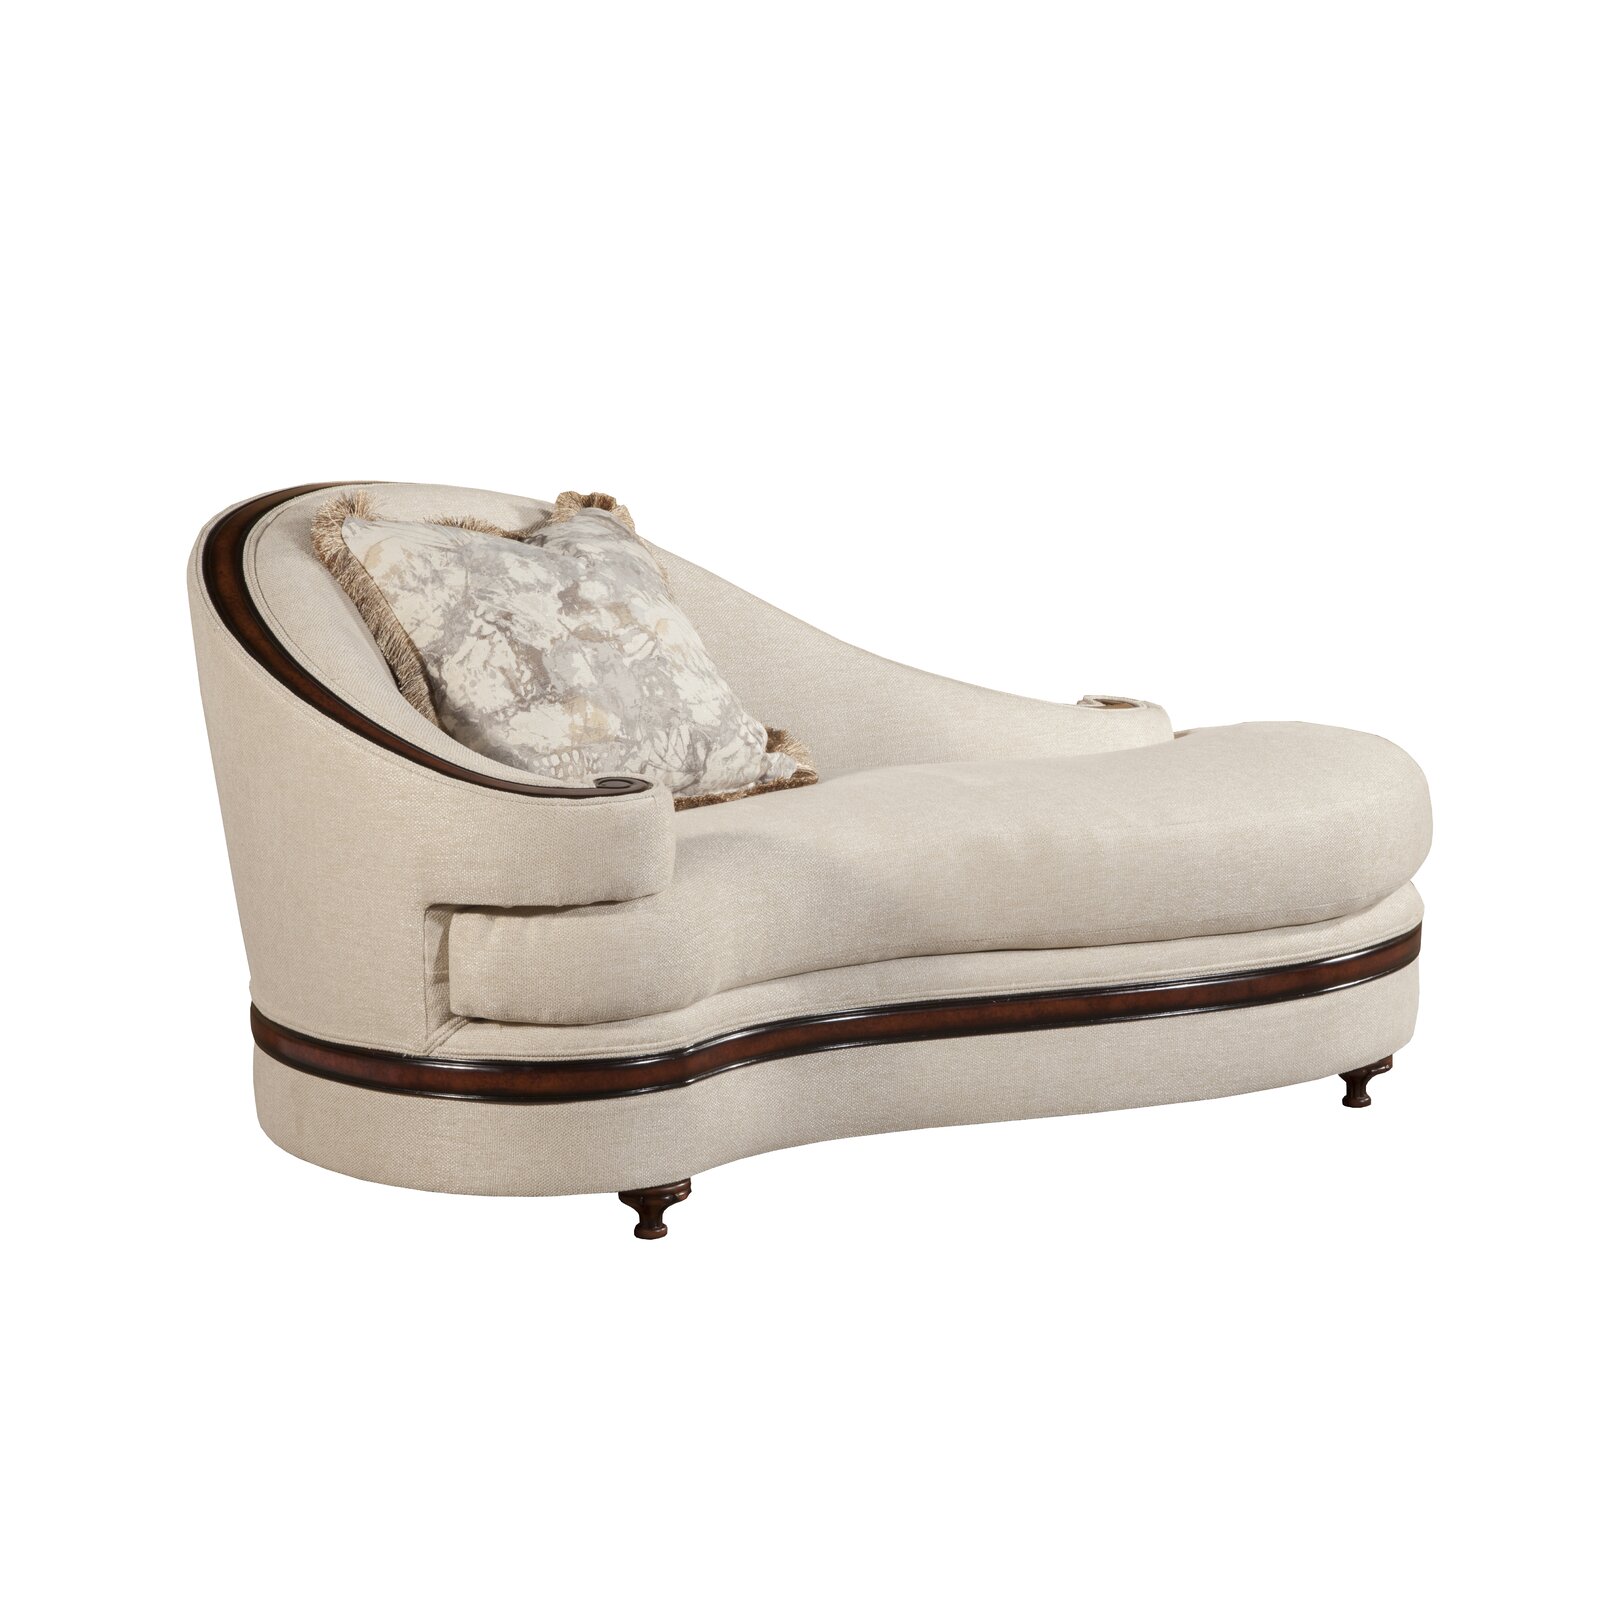 Benetti's Italia Emma Upholstered Chaise Lounge